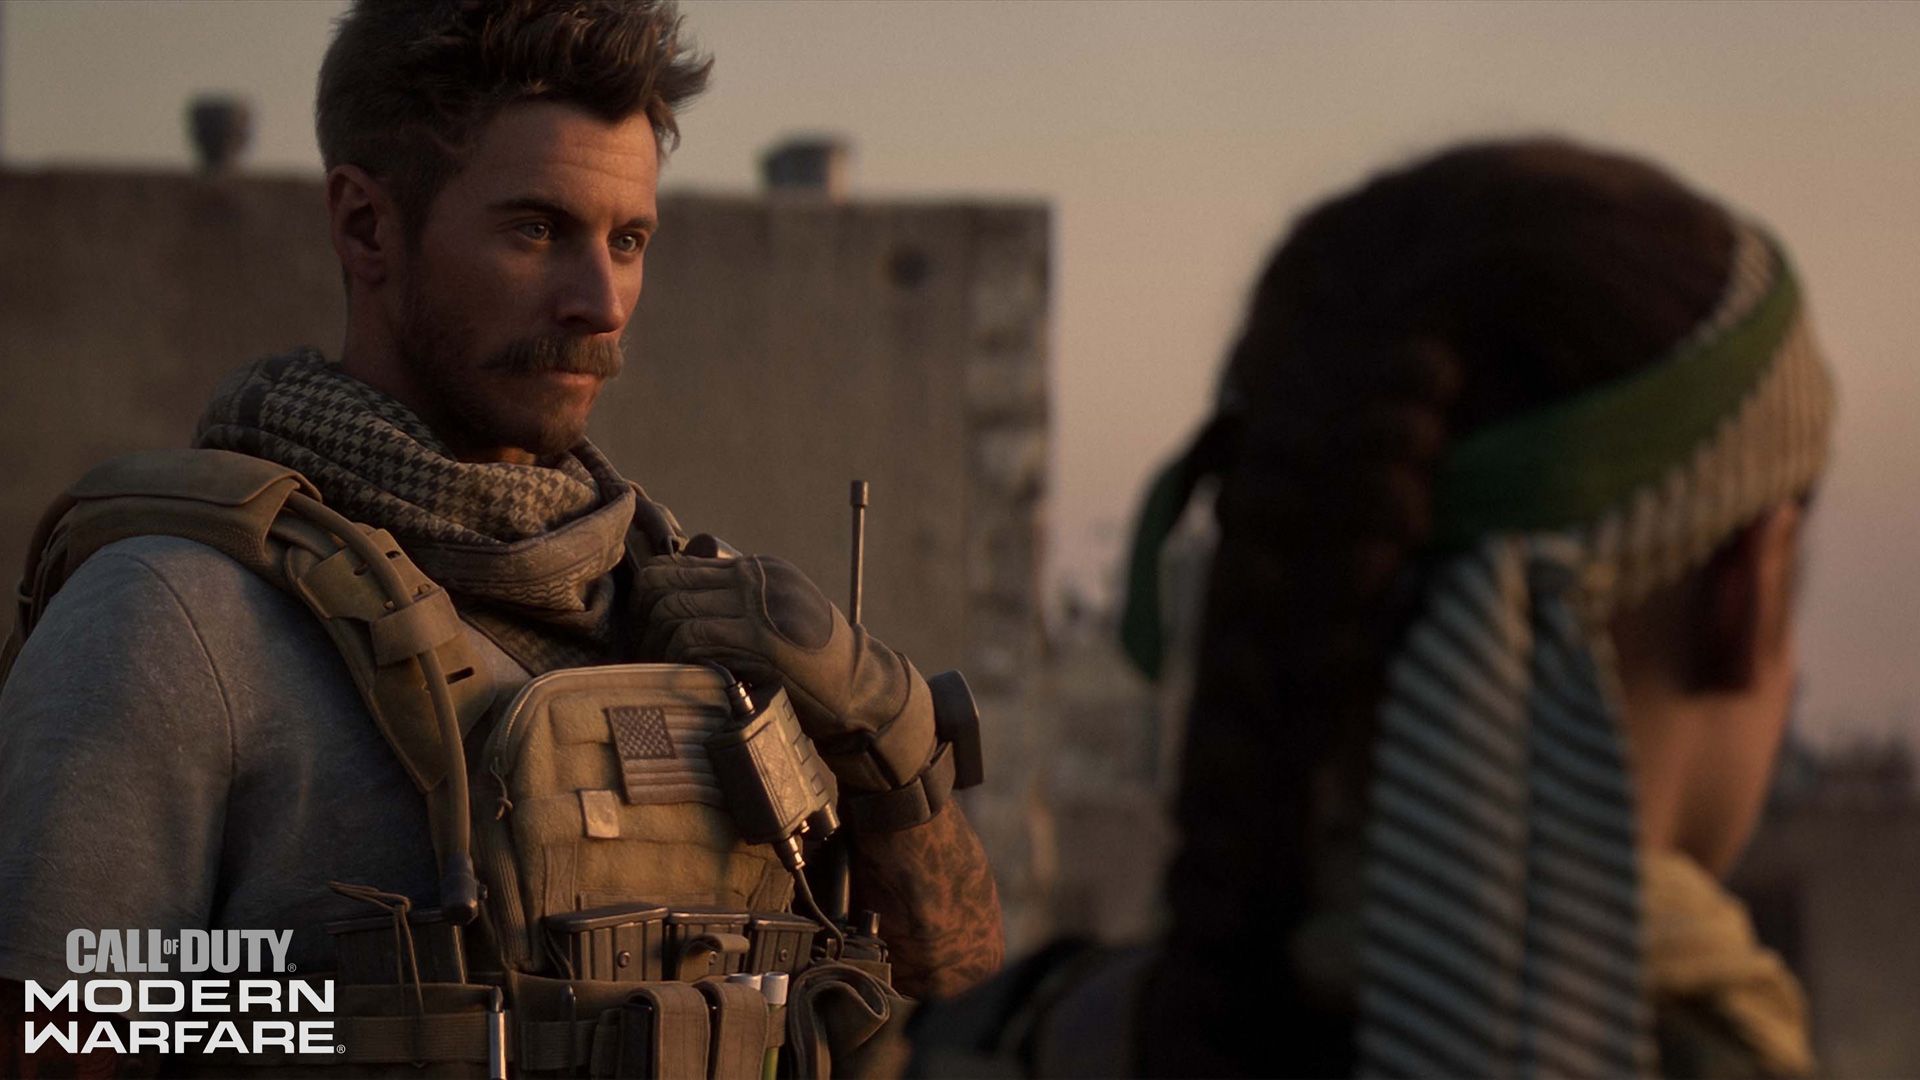 Call of Duty: Modern Warfare rewrites a controversial U.S. attack